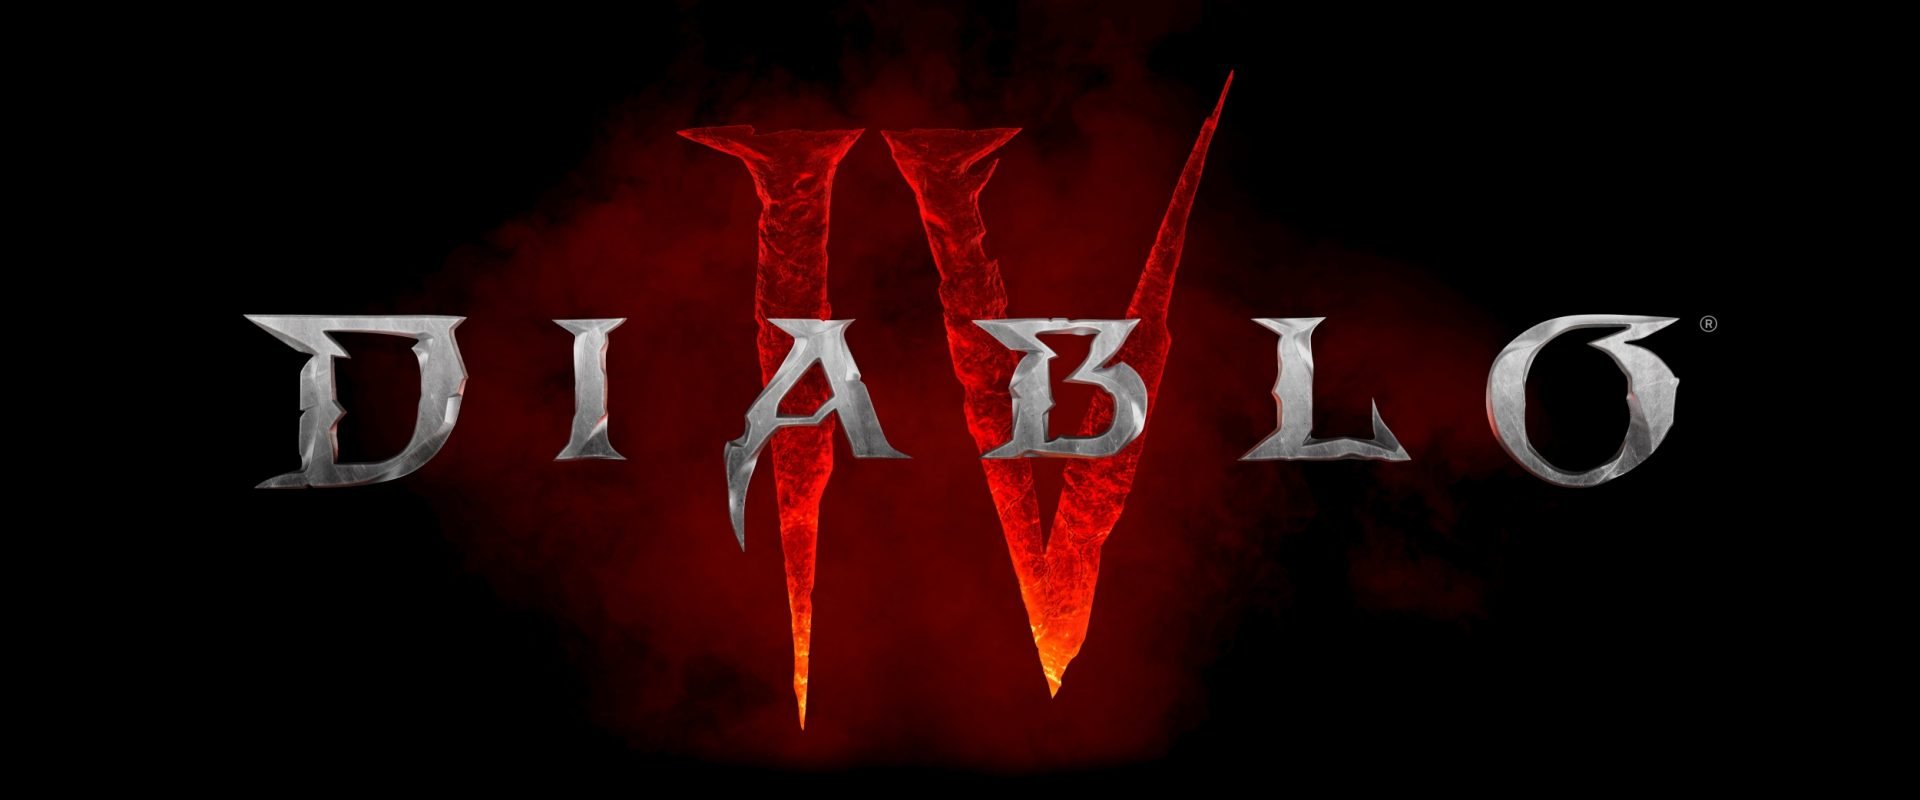 Diablo-IV-1-1920x800.jpg